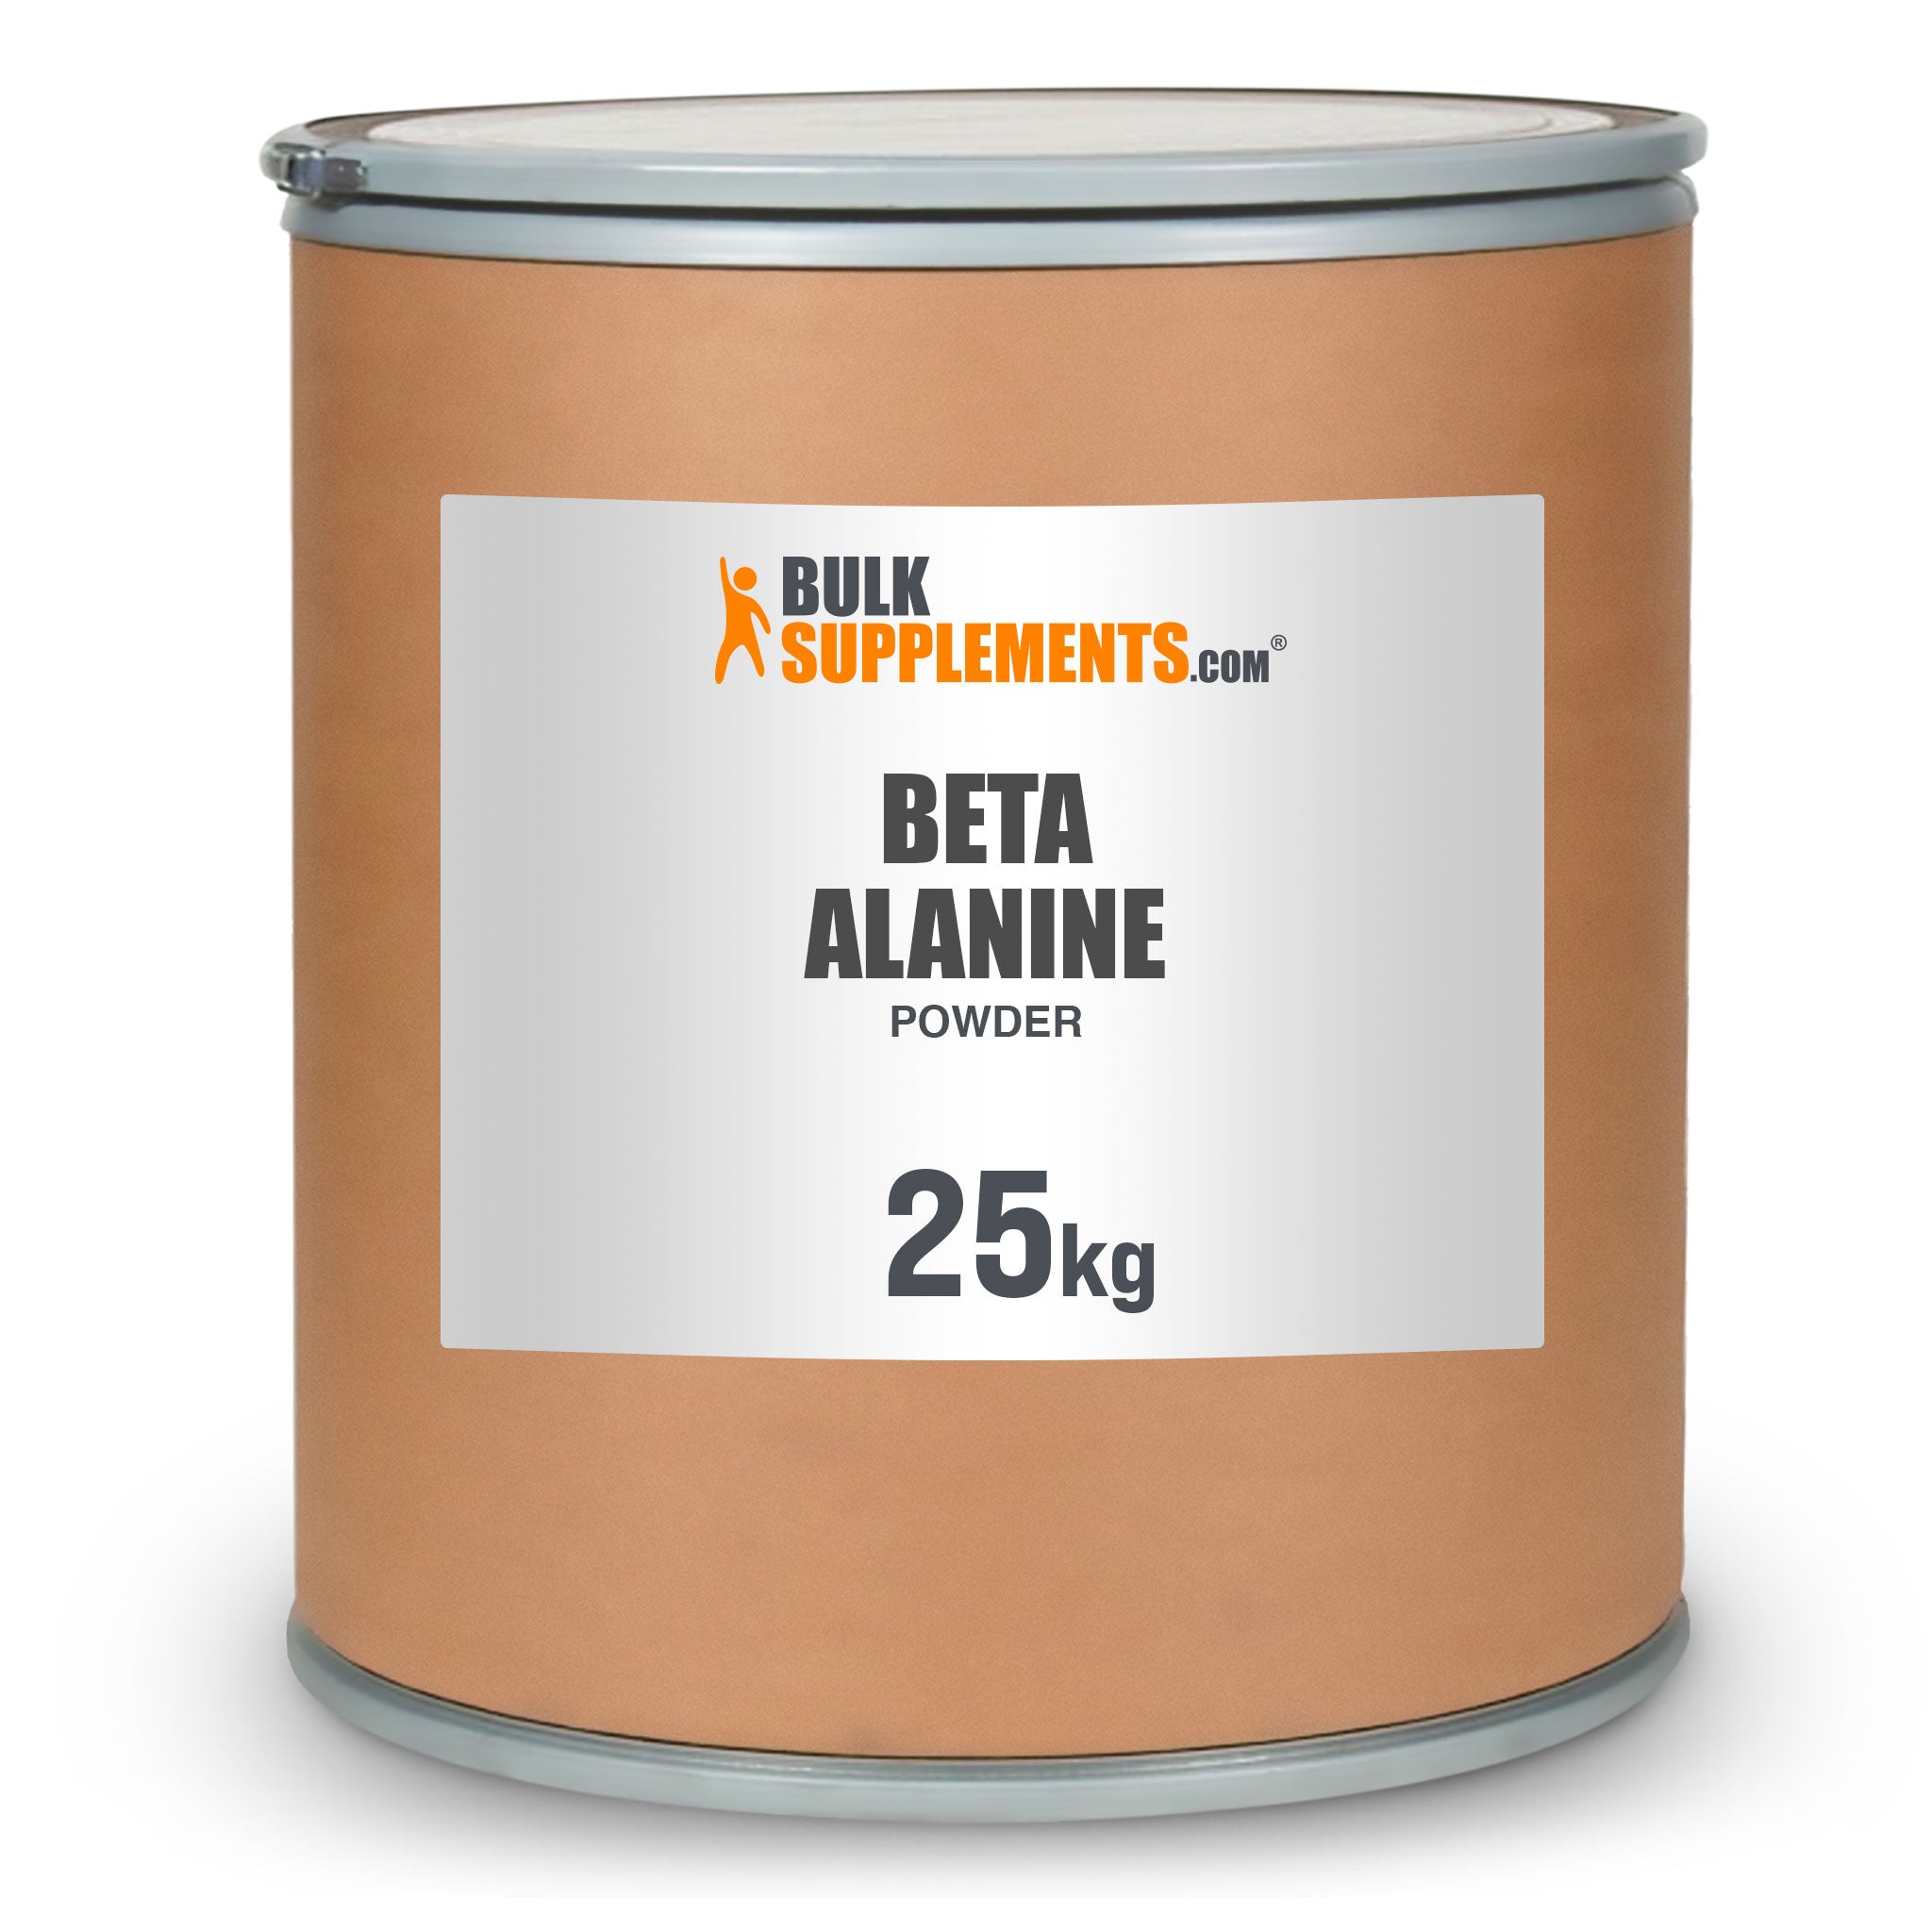 Beta Alanine Bulk Powder, 25kg can